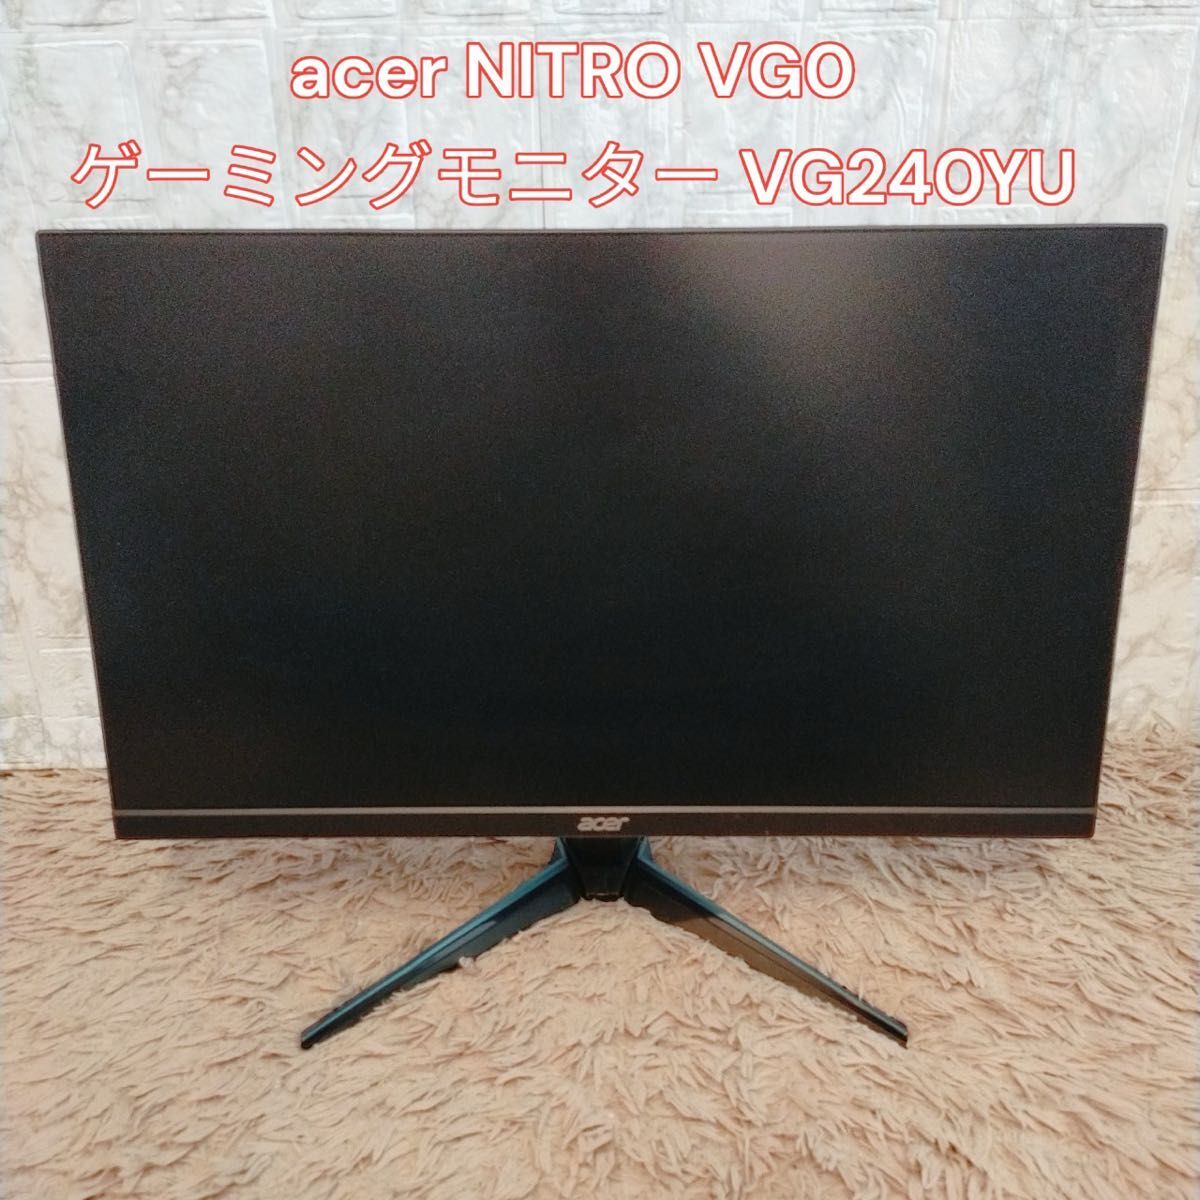 acer NITRO VG0 ゲーミングモニター VG240_画像1